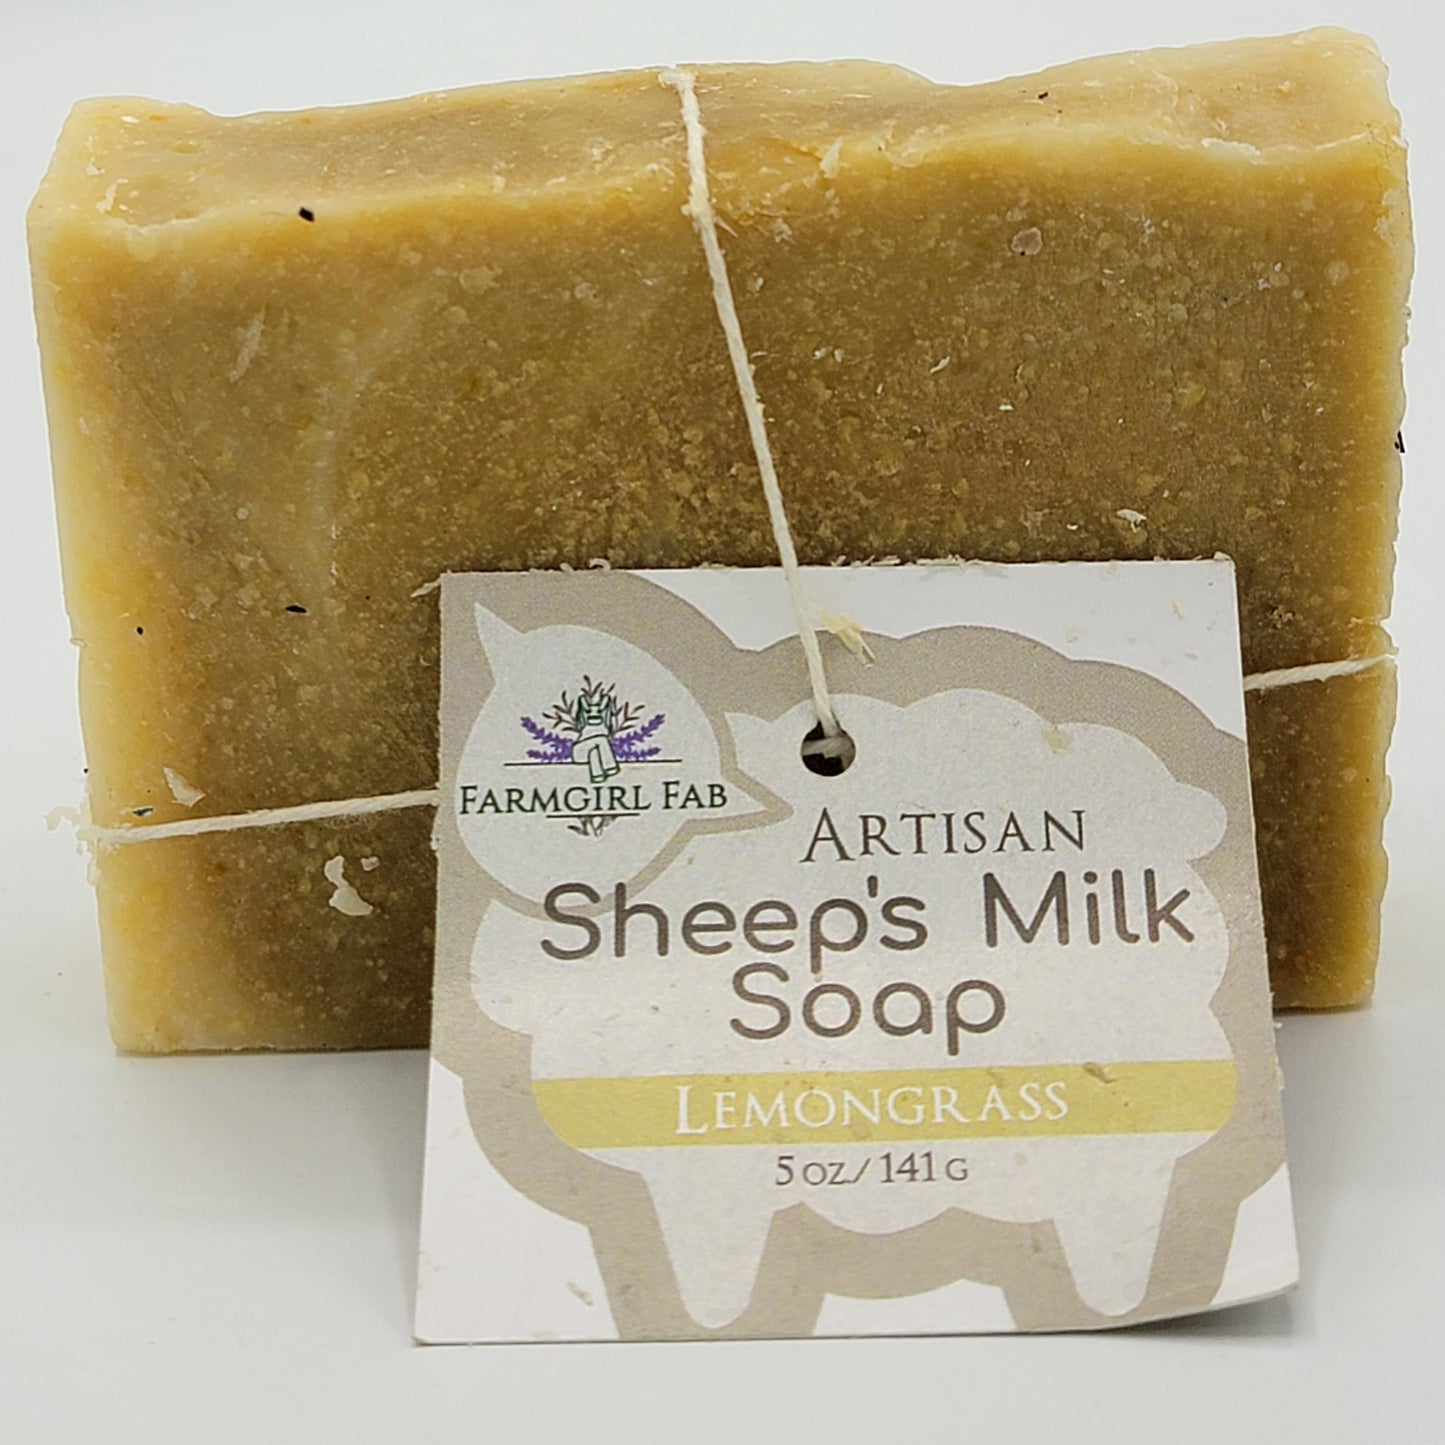 Artisan Sheep's Milk Soap